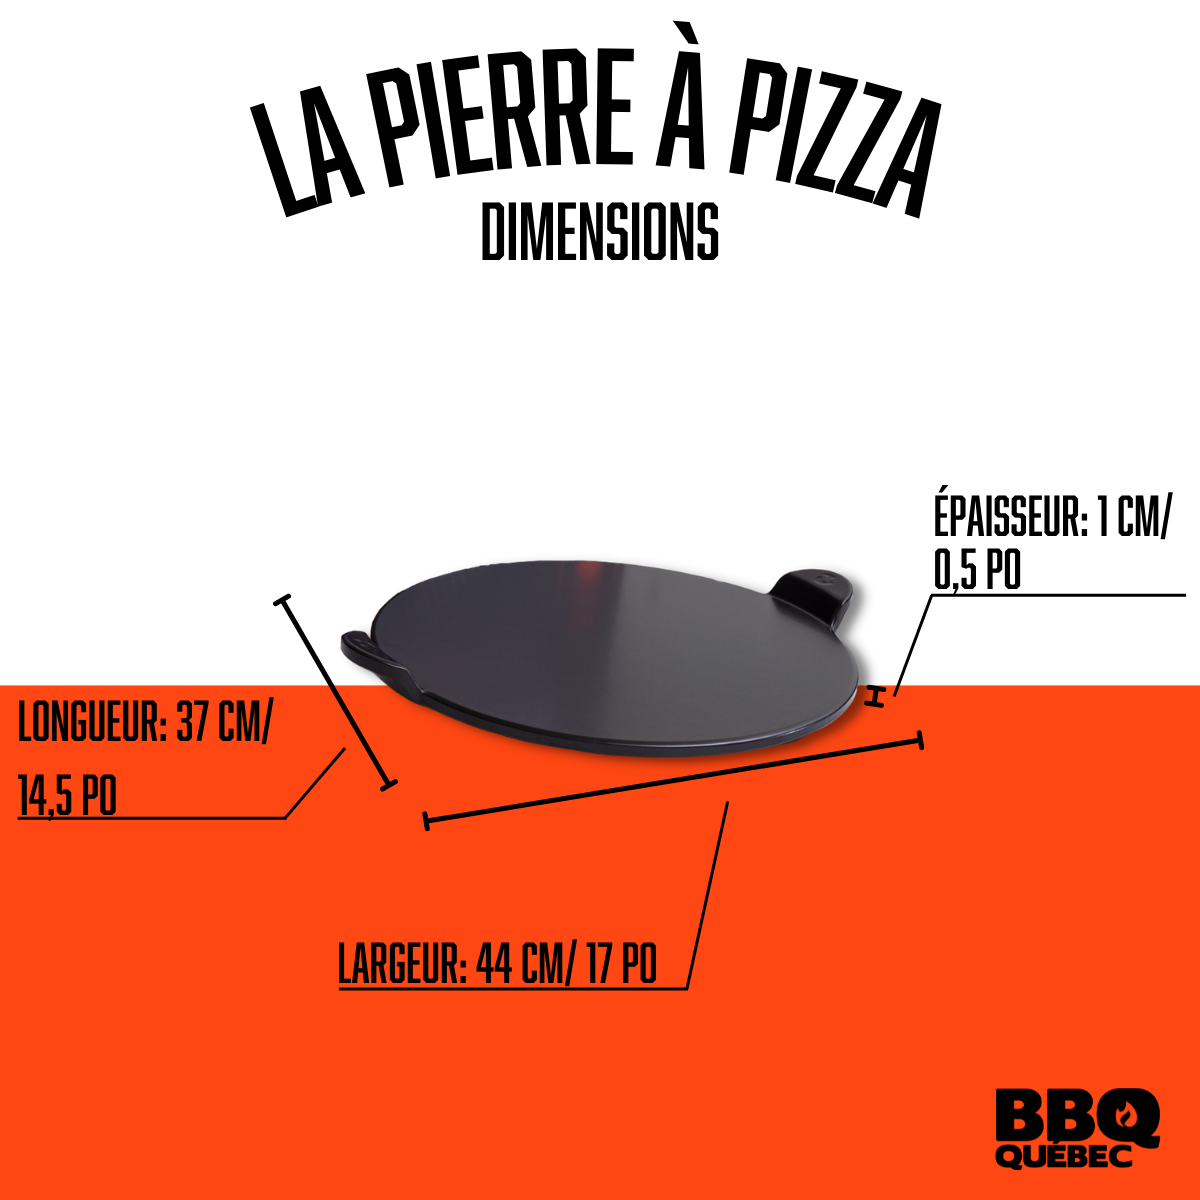 GRILLMEISTER Pierre à pizza